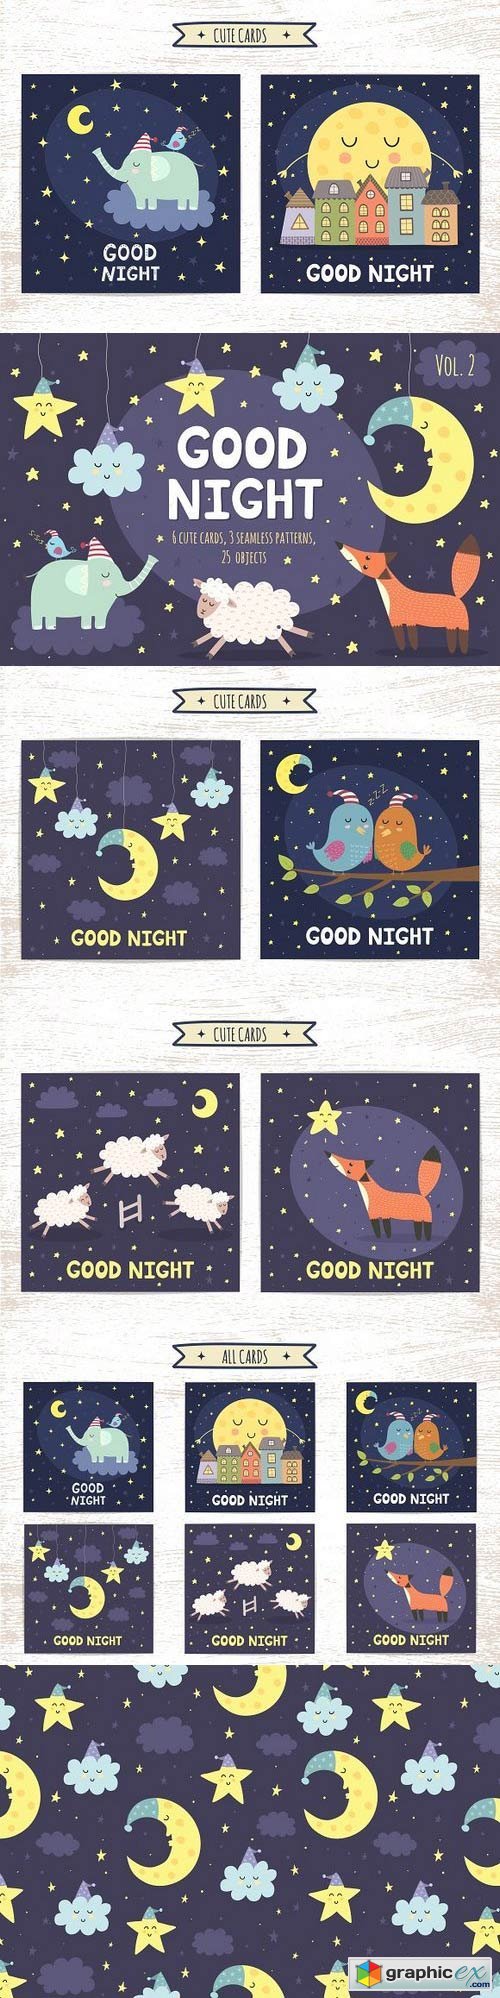 Good Night Vol. 2: patterns & cards